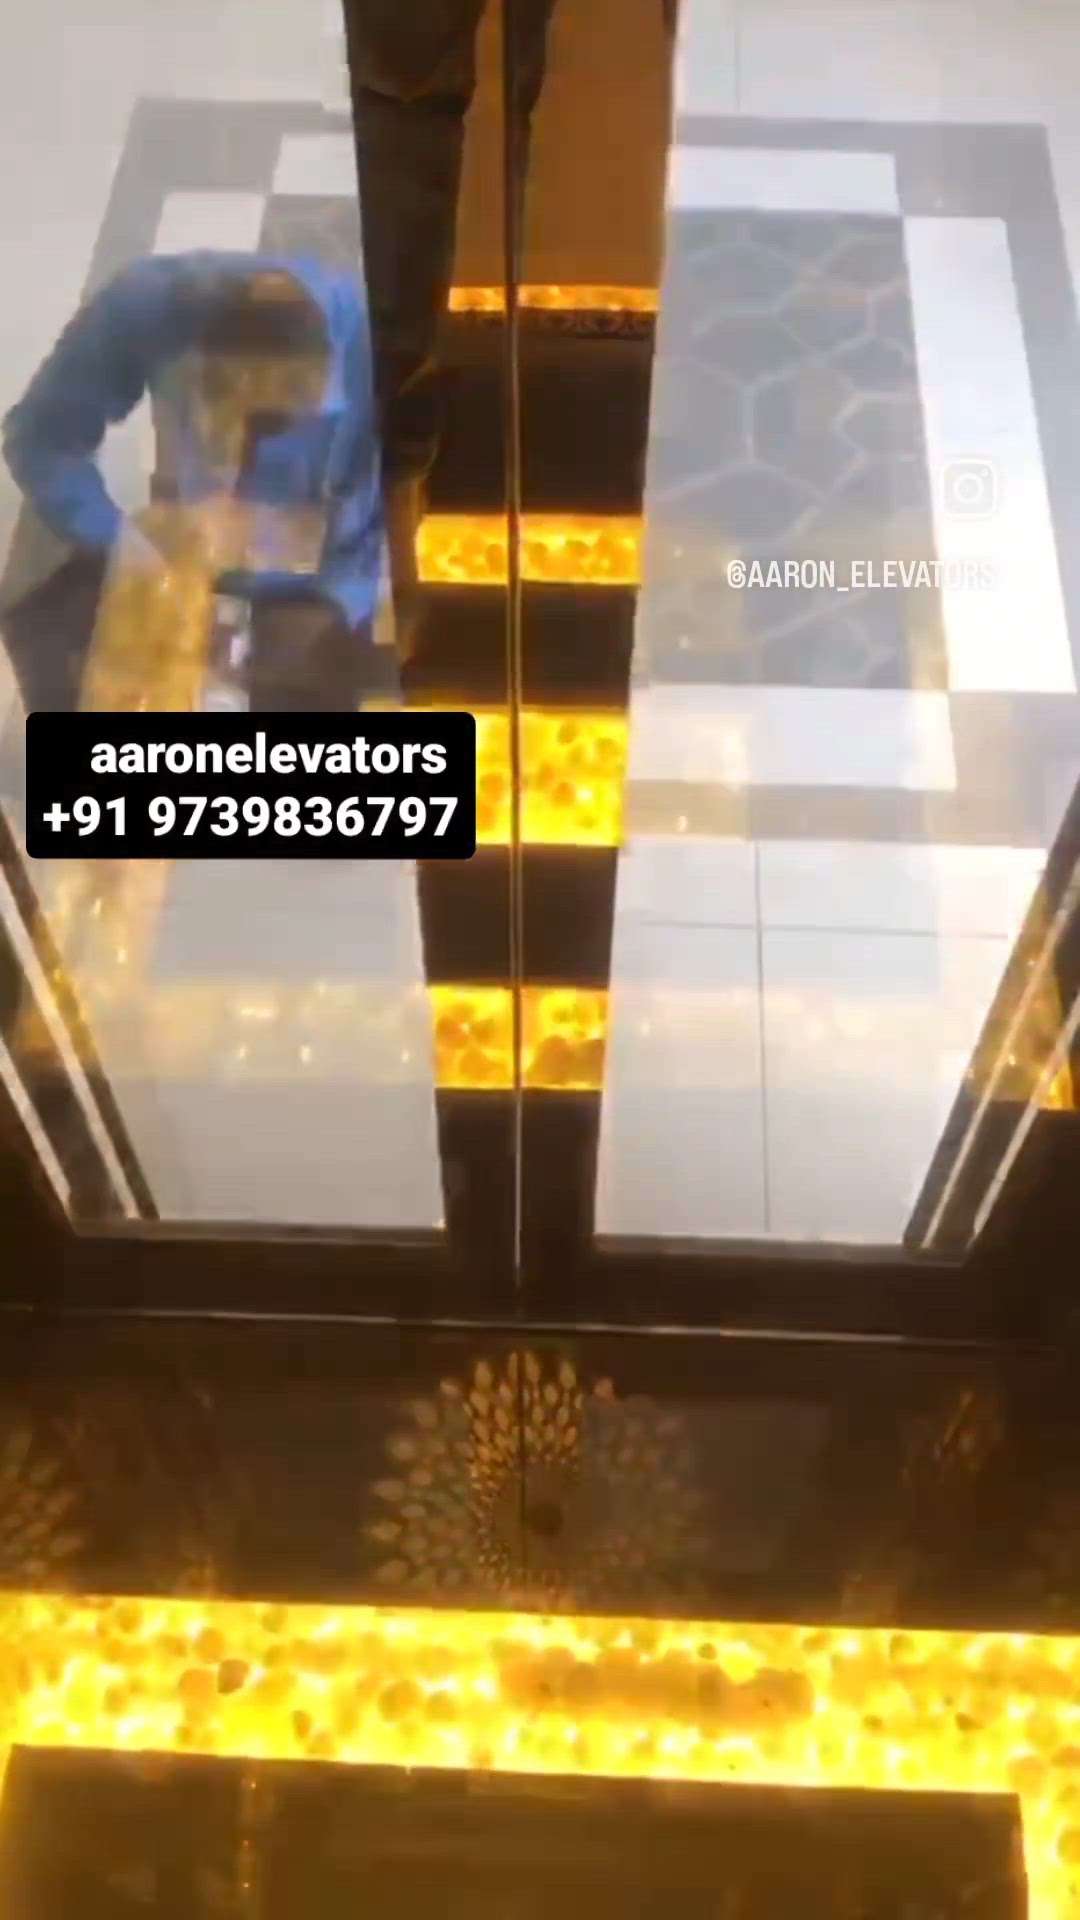 #elevatorinkerala 
best home lift company in Kerala
elevator company in Kerala Kochi  #
home lift company in kochi
+91 9739836797
customise villa home lift
#homelift #villalift #himeelevators #elevators #kerala #bangalore
HOME ELEVATORS IN KERALA 
BEST ELEVATORS IN BENGALURU 
LUXUARY ELEVATOR IN BENGALURU 
Aaron Elevators Is The Best And Luxuary Home Elevator  Manufacturer in Bengaluru #bengaluru  #kerala  #india #interior #homelift #homeelevator #elevators #luxuary #home #vilãs #office #english #company #homeinterior #civilengineering #capsule #clasic #luxuary #modan #newmode #latest #instagram #glasslife #elevatorpranks #electronic #lifts
best home lift company in Kerala
elevator company in Kerala Cochin
home lift company in kochi
customise villa home lift
#homelift #villalift
Home Lift | Glass Lift | Elevators #kerala #kochi #interiordesign #malappuram #ottapalam  #palakkad
+91 9739836797